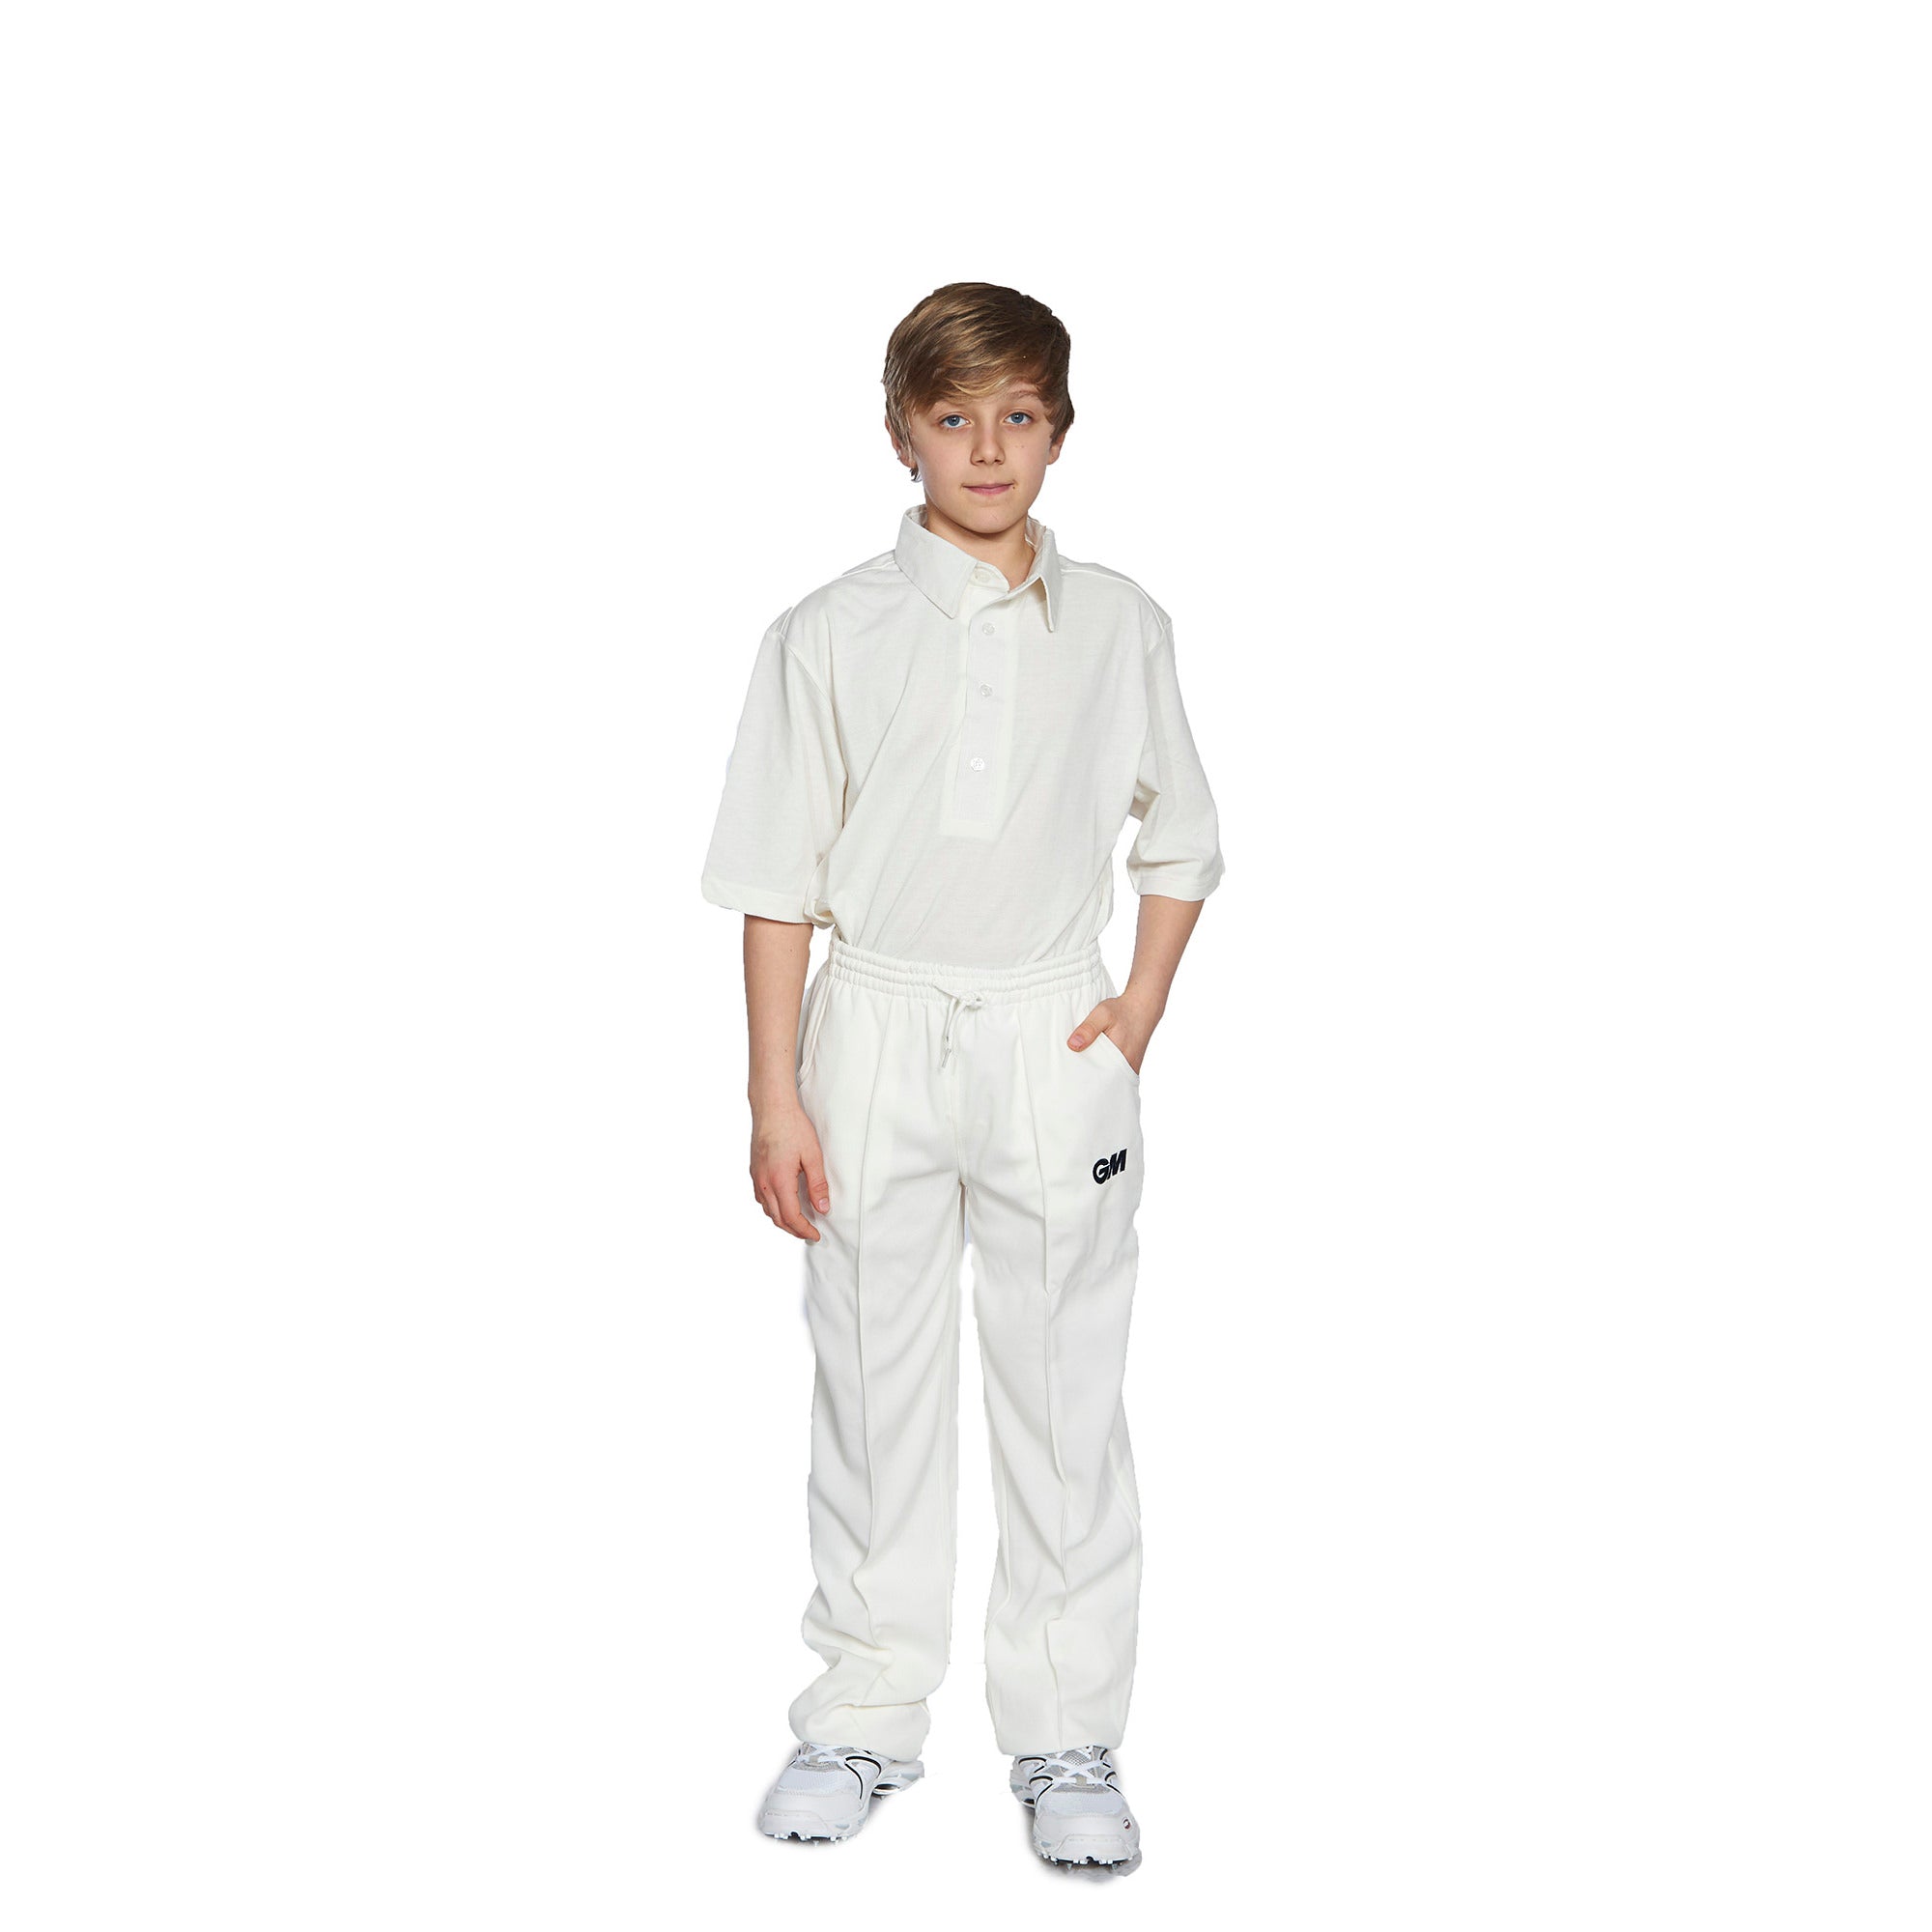 SG Legend Half Sleeve Cricket Shirt Whites  TeamSG